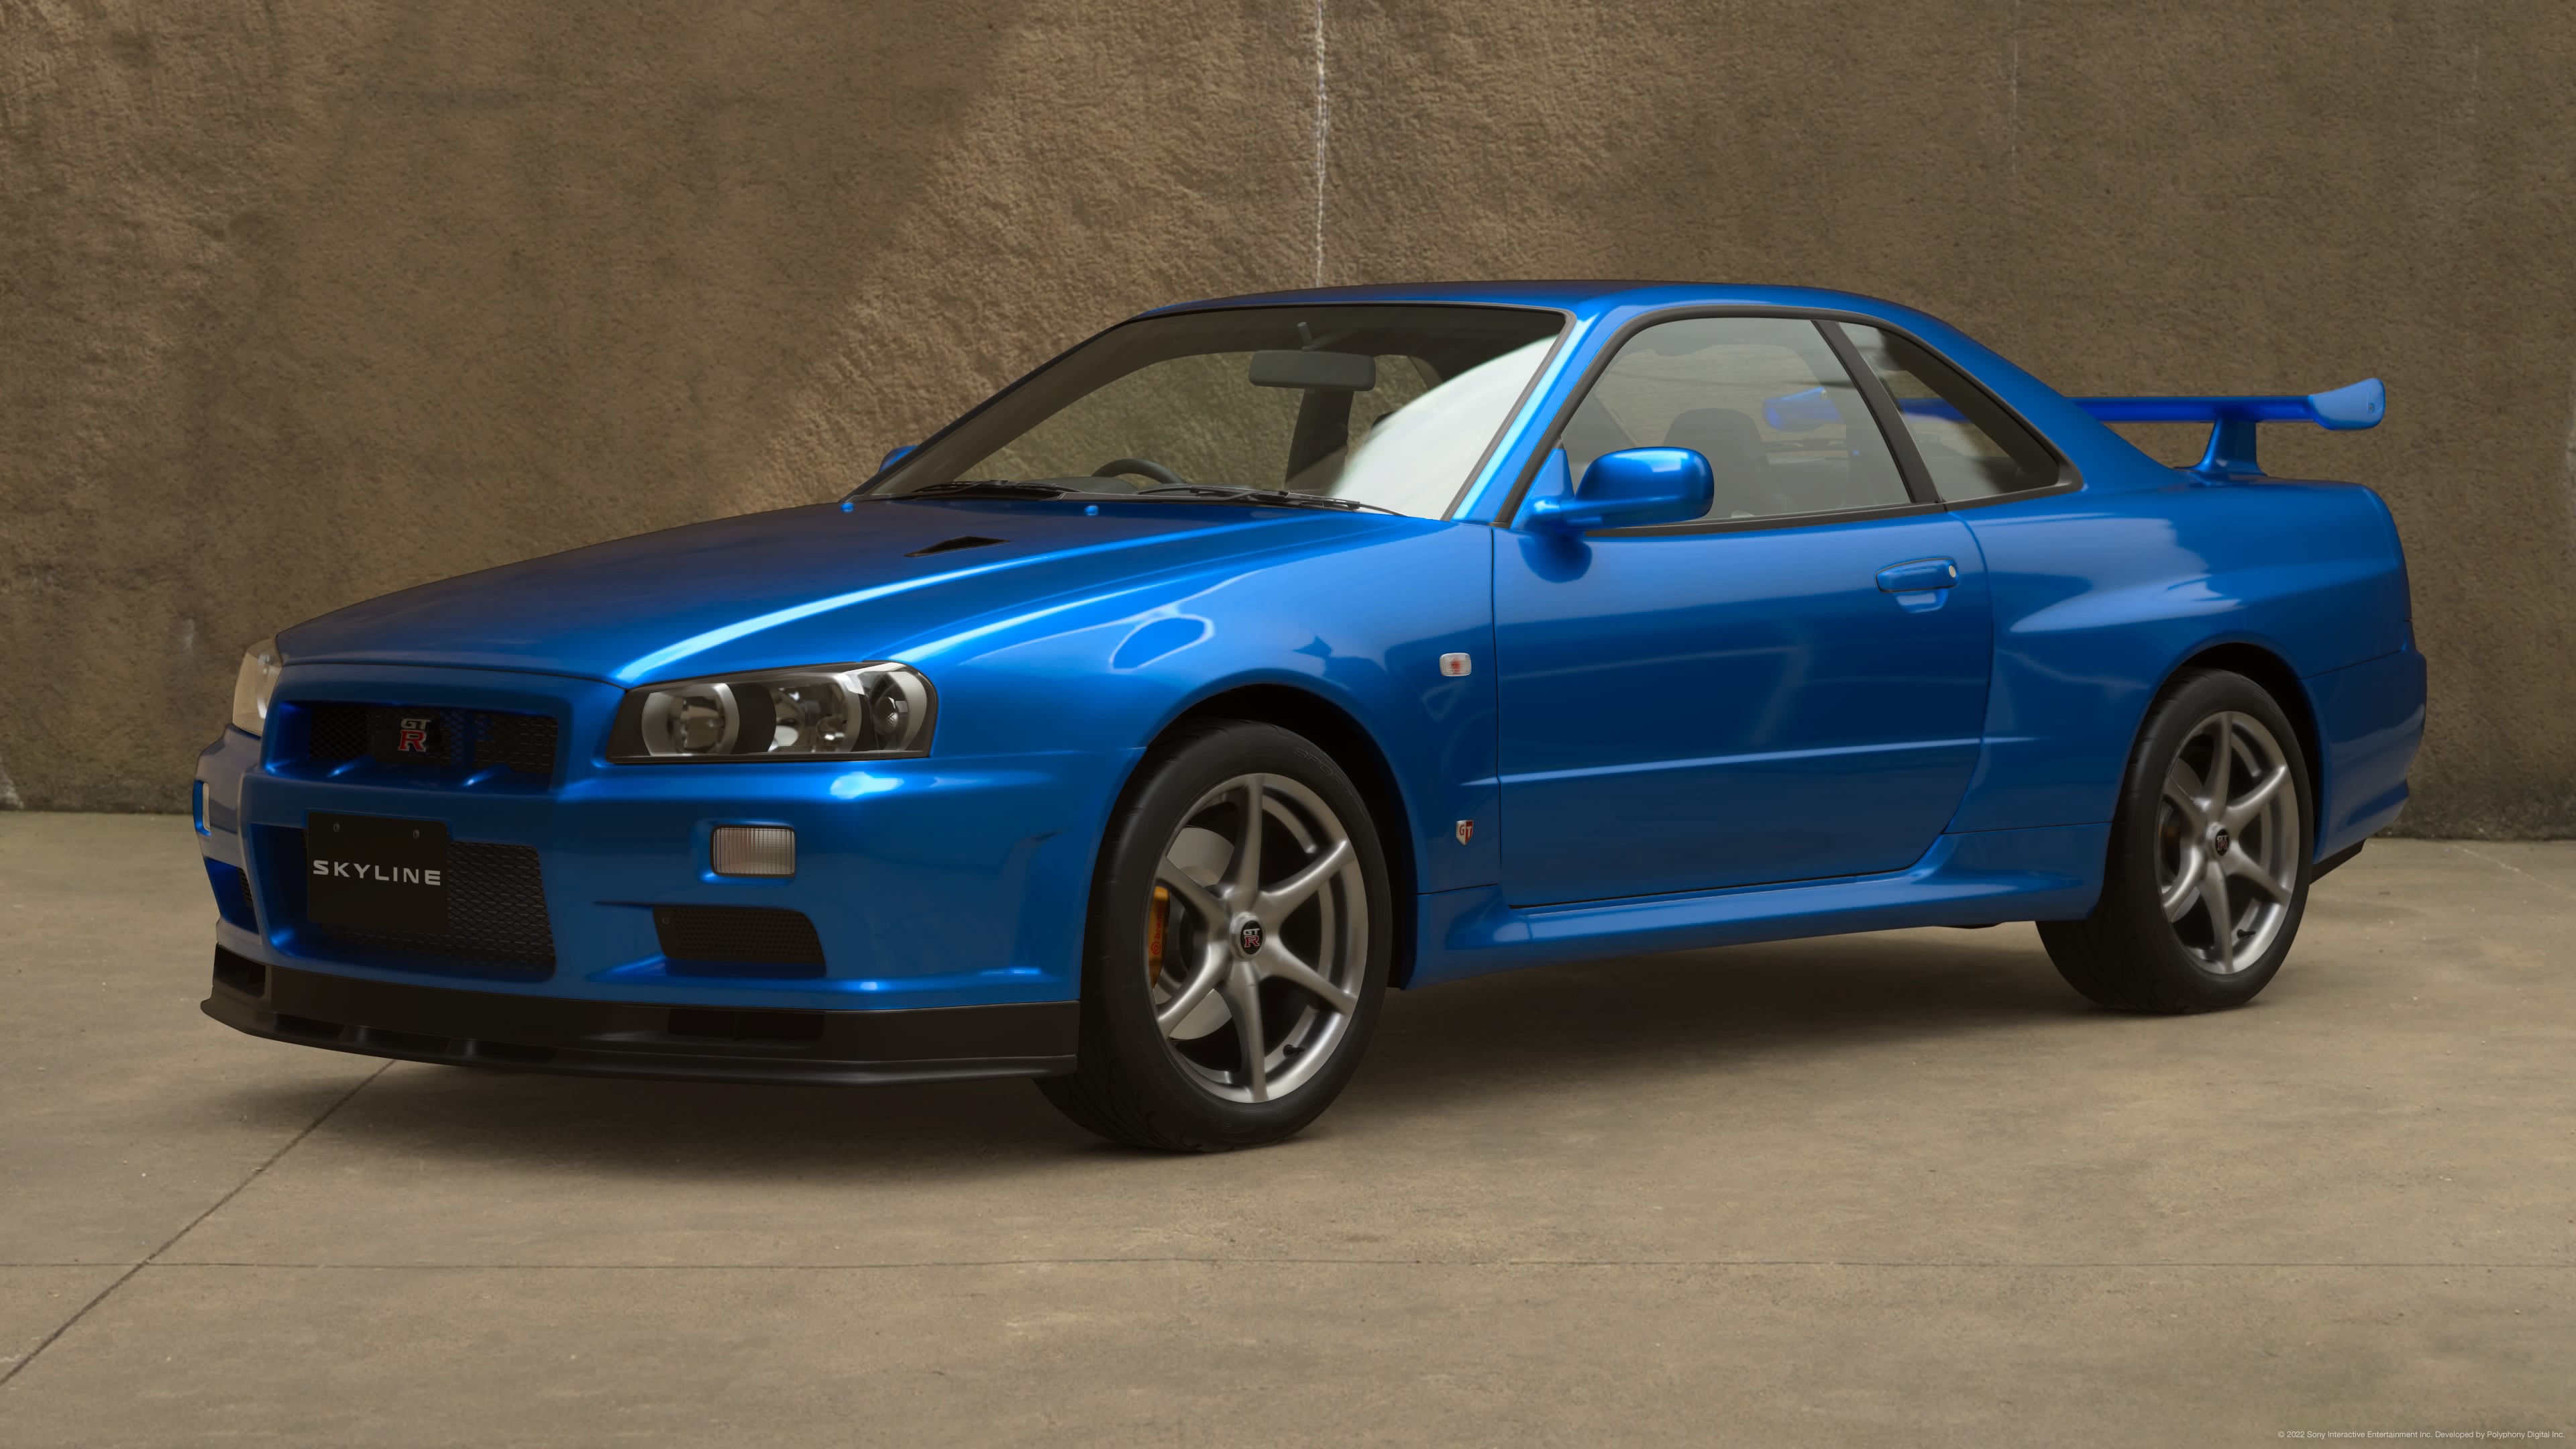 Nissan Skyline GT-R V-Spec (R34), Need for Speed Wiki